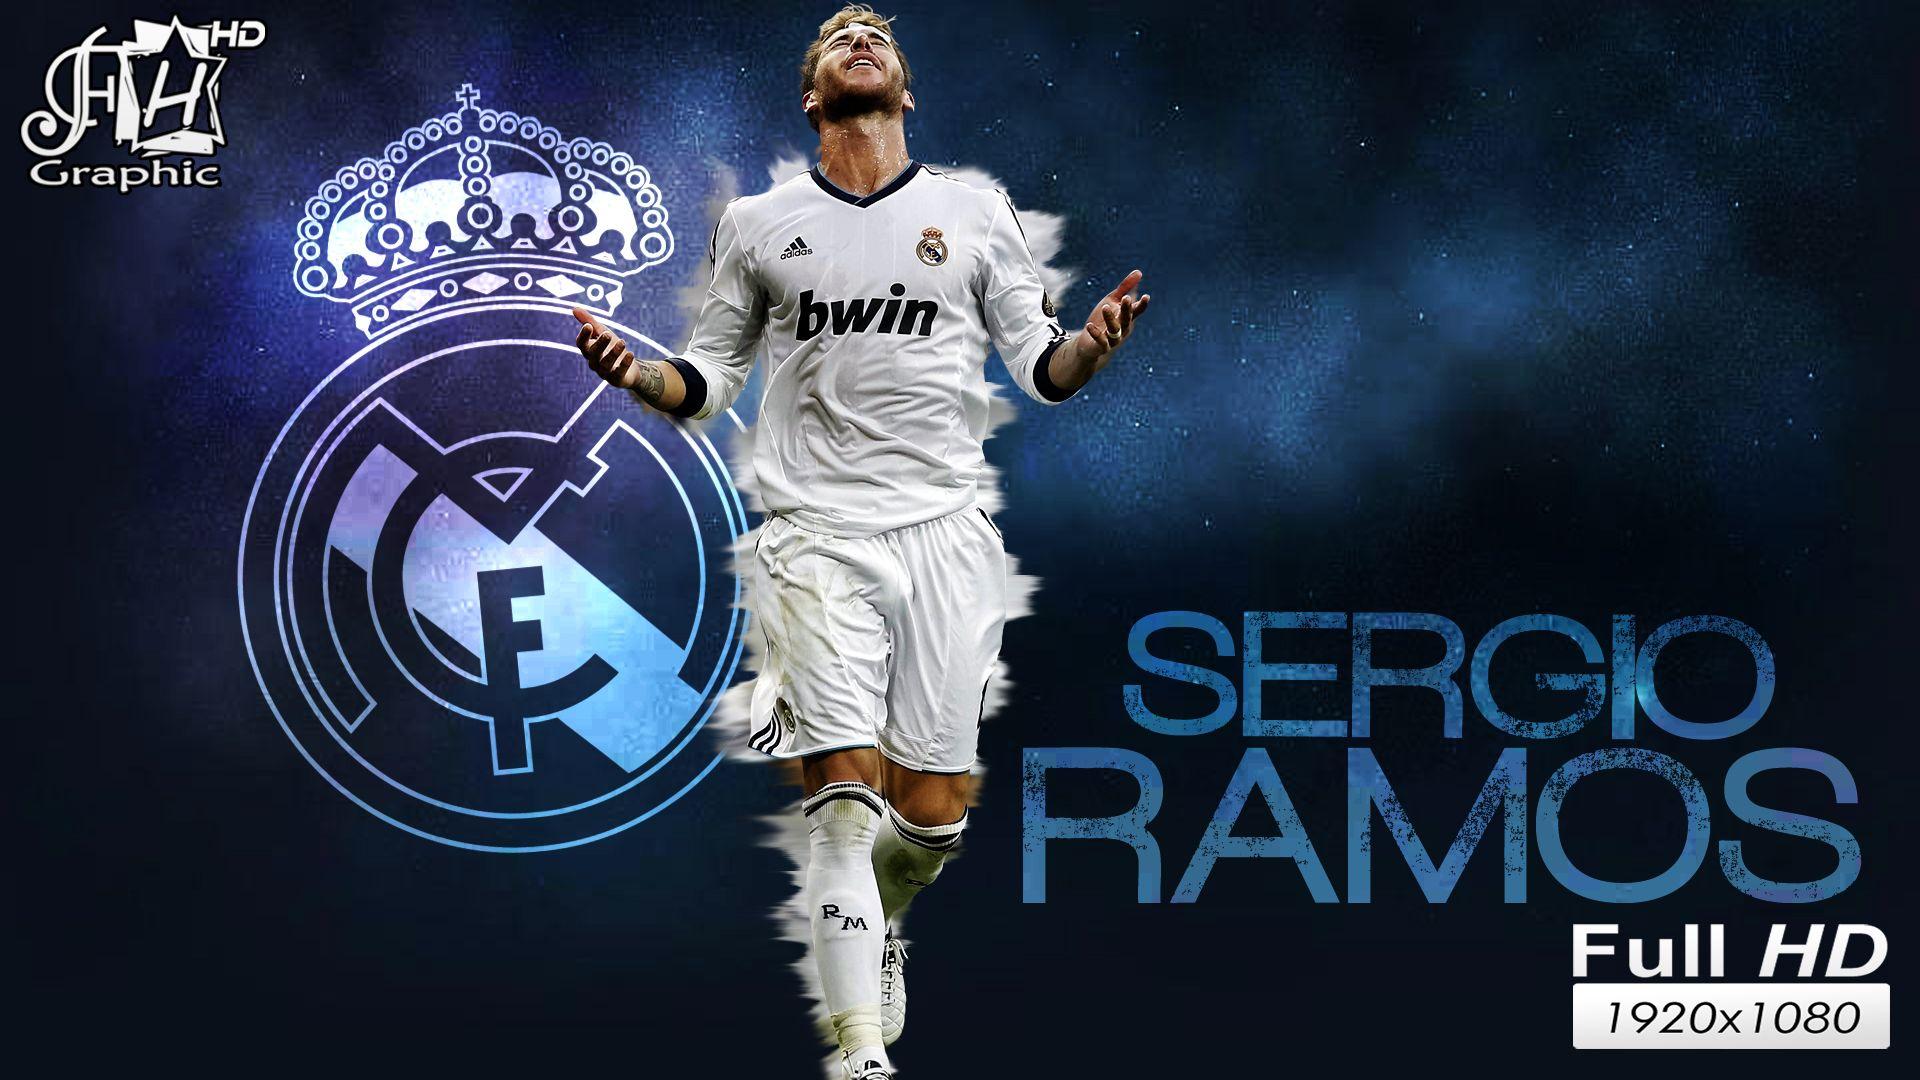 Real Madrid Sergio Ramos football player wallpaper and image